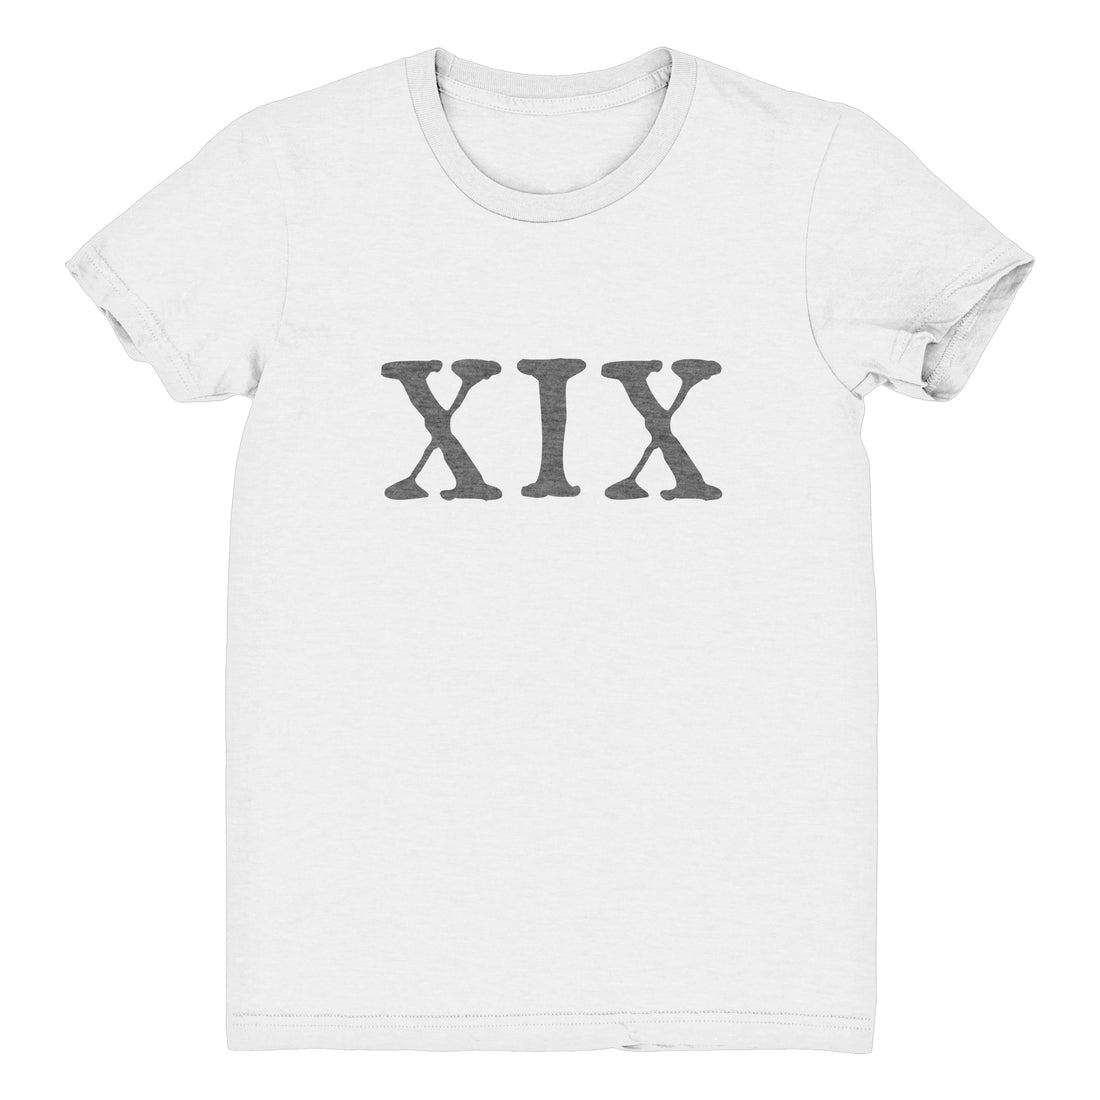 19TH AMENDMENT Unisex T-Shirt